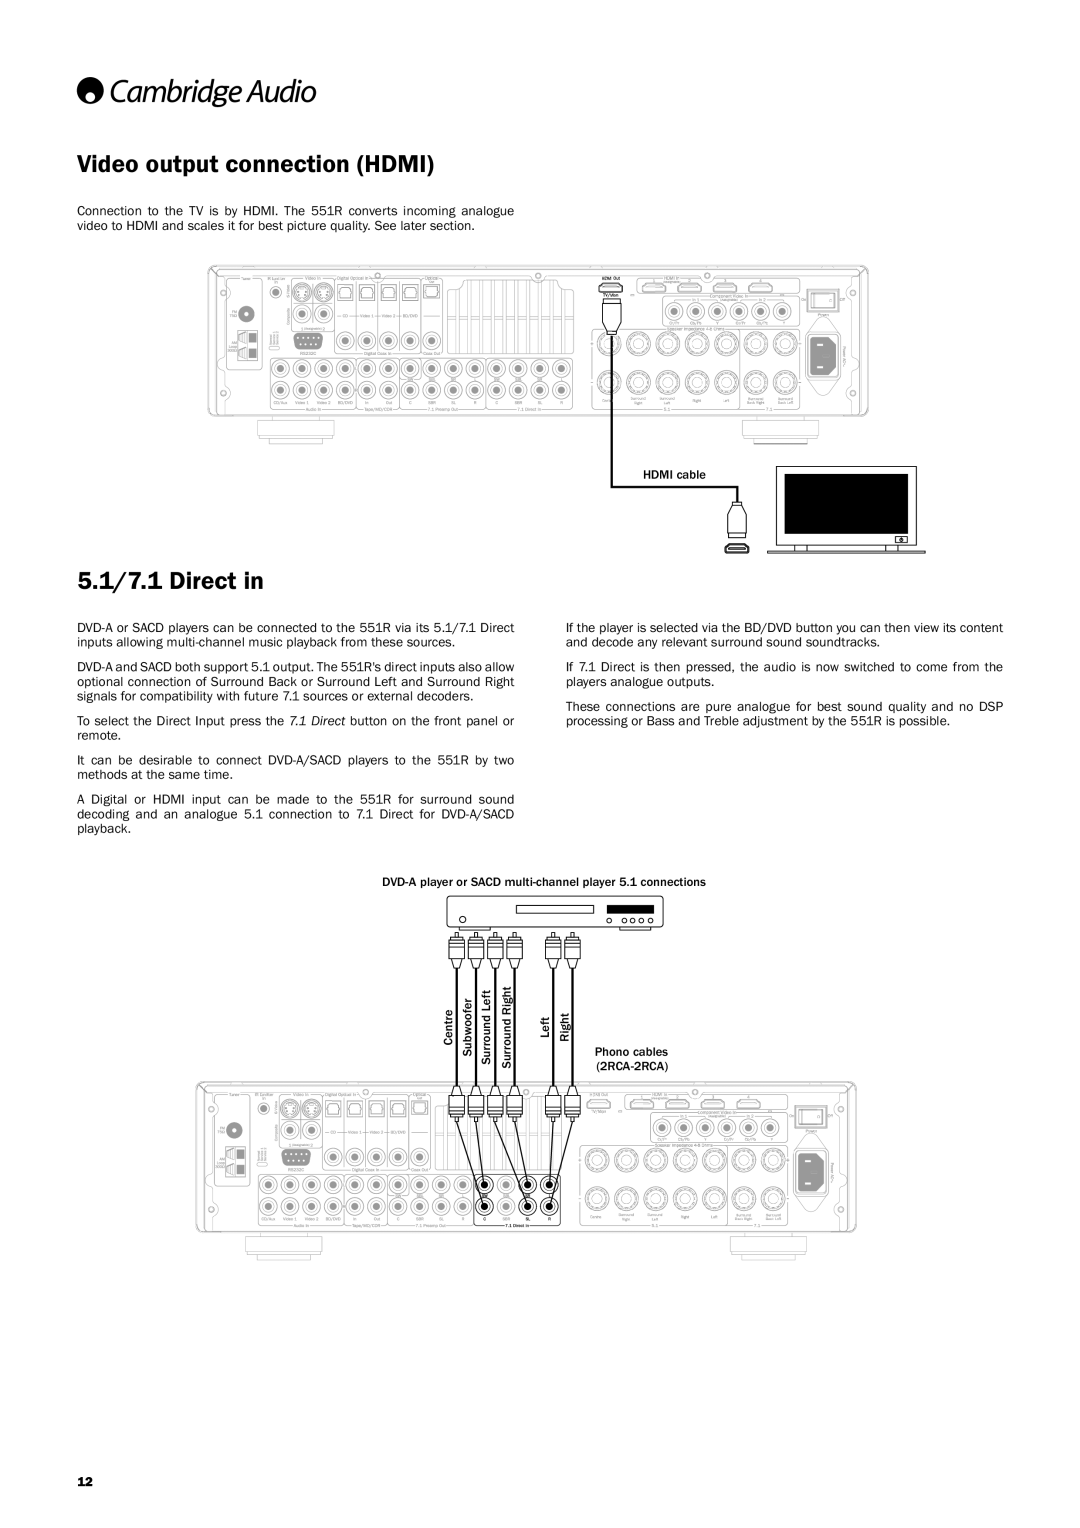 Cambridge Audio 551R user manual VideooutputconnectionHDMI, 5.1/7.1Directin 